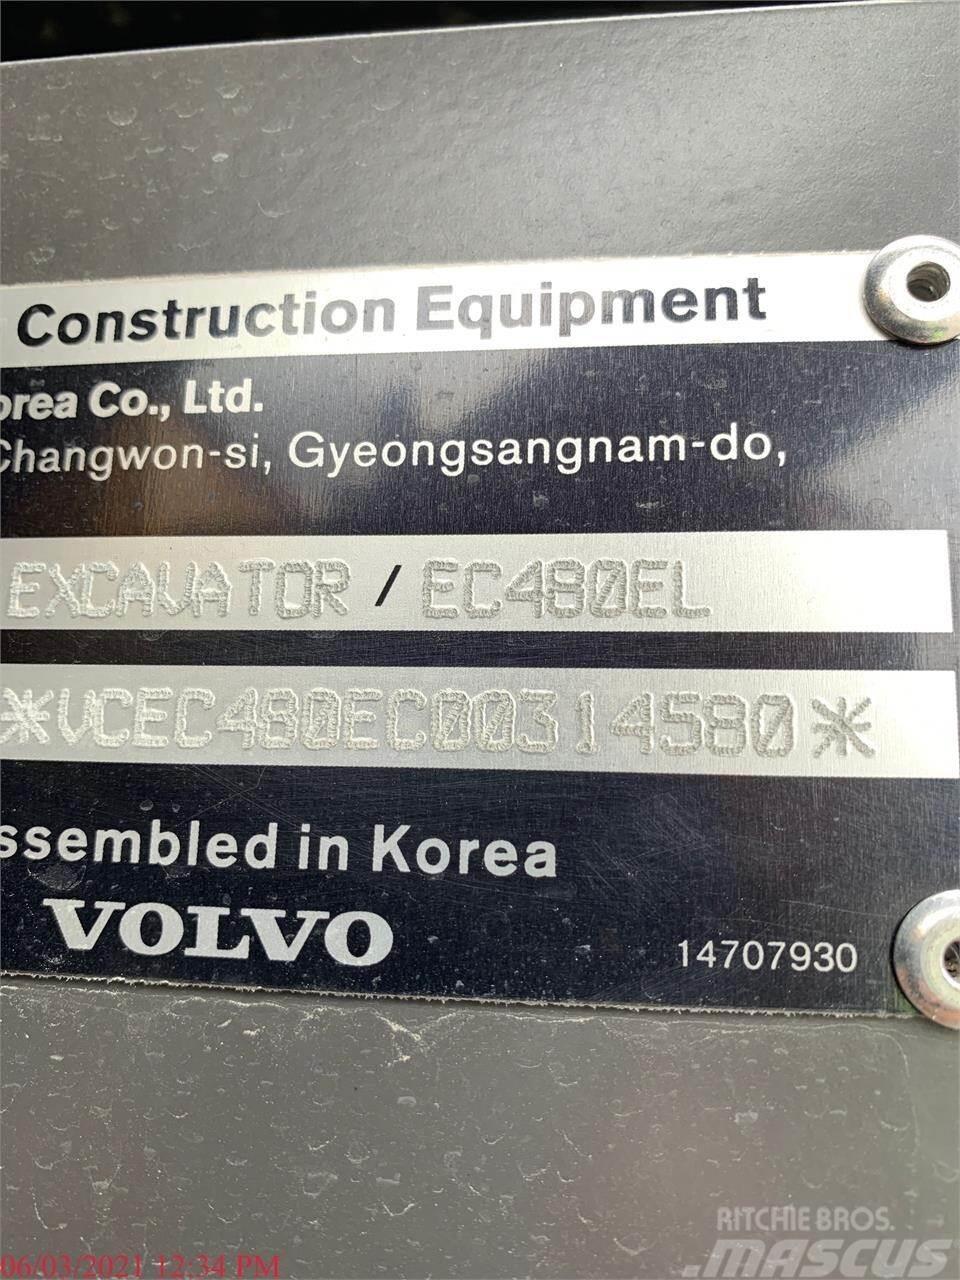 Volvo EC480EL Pásová rýpadla